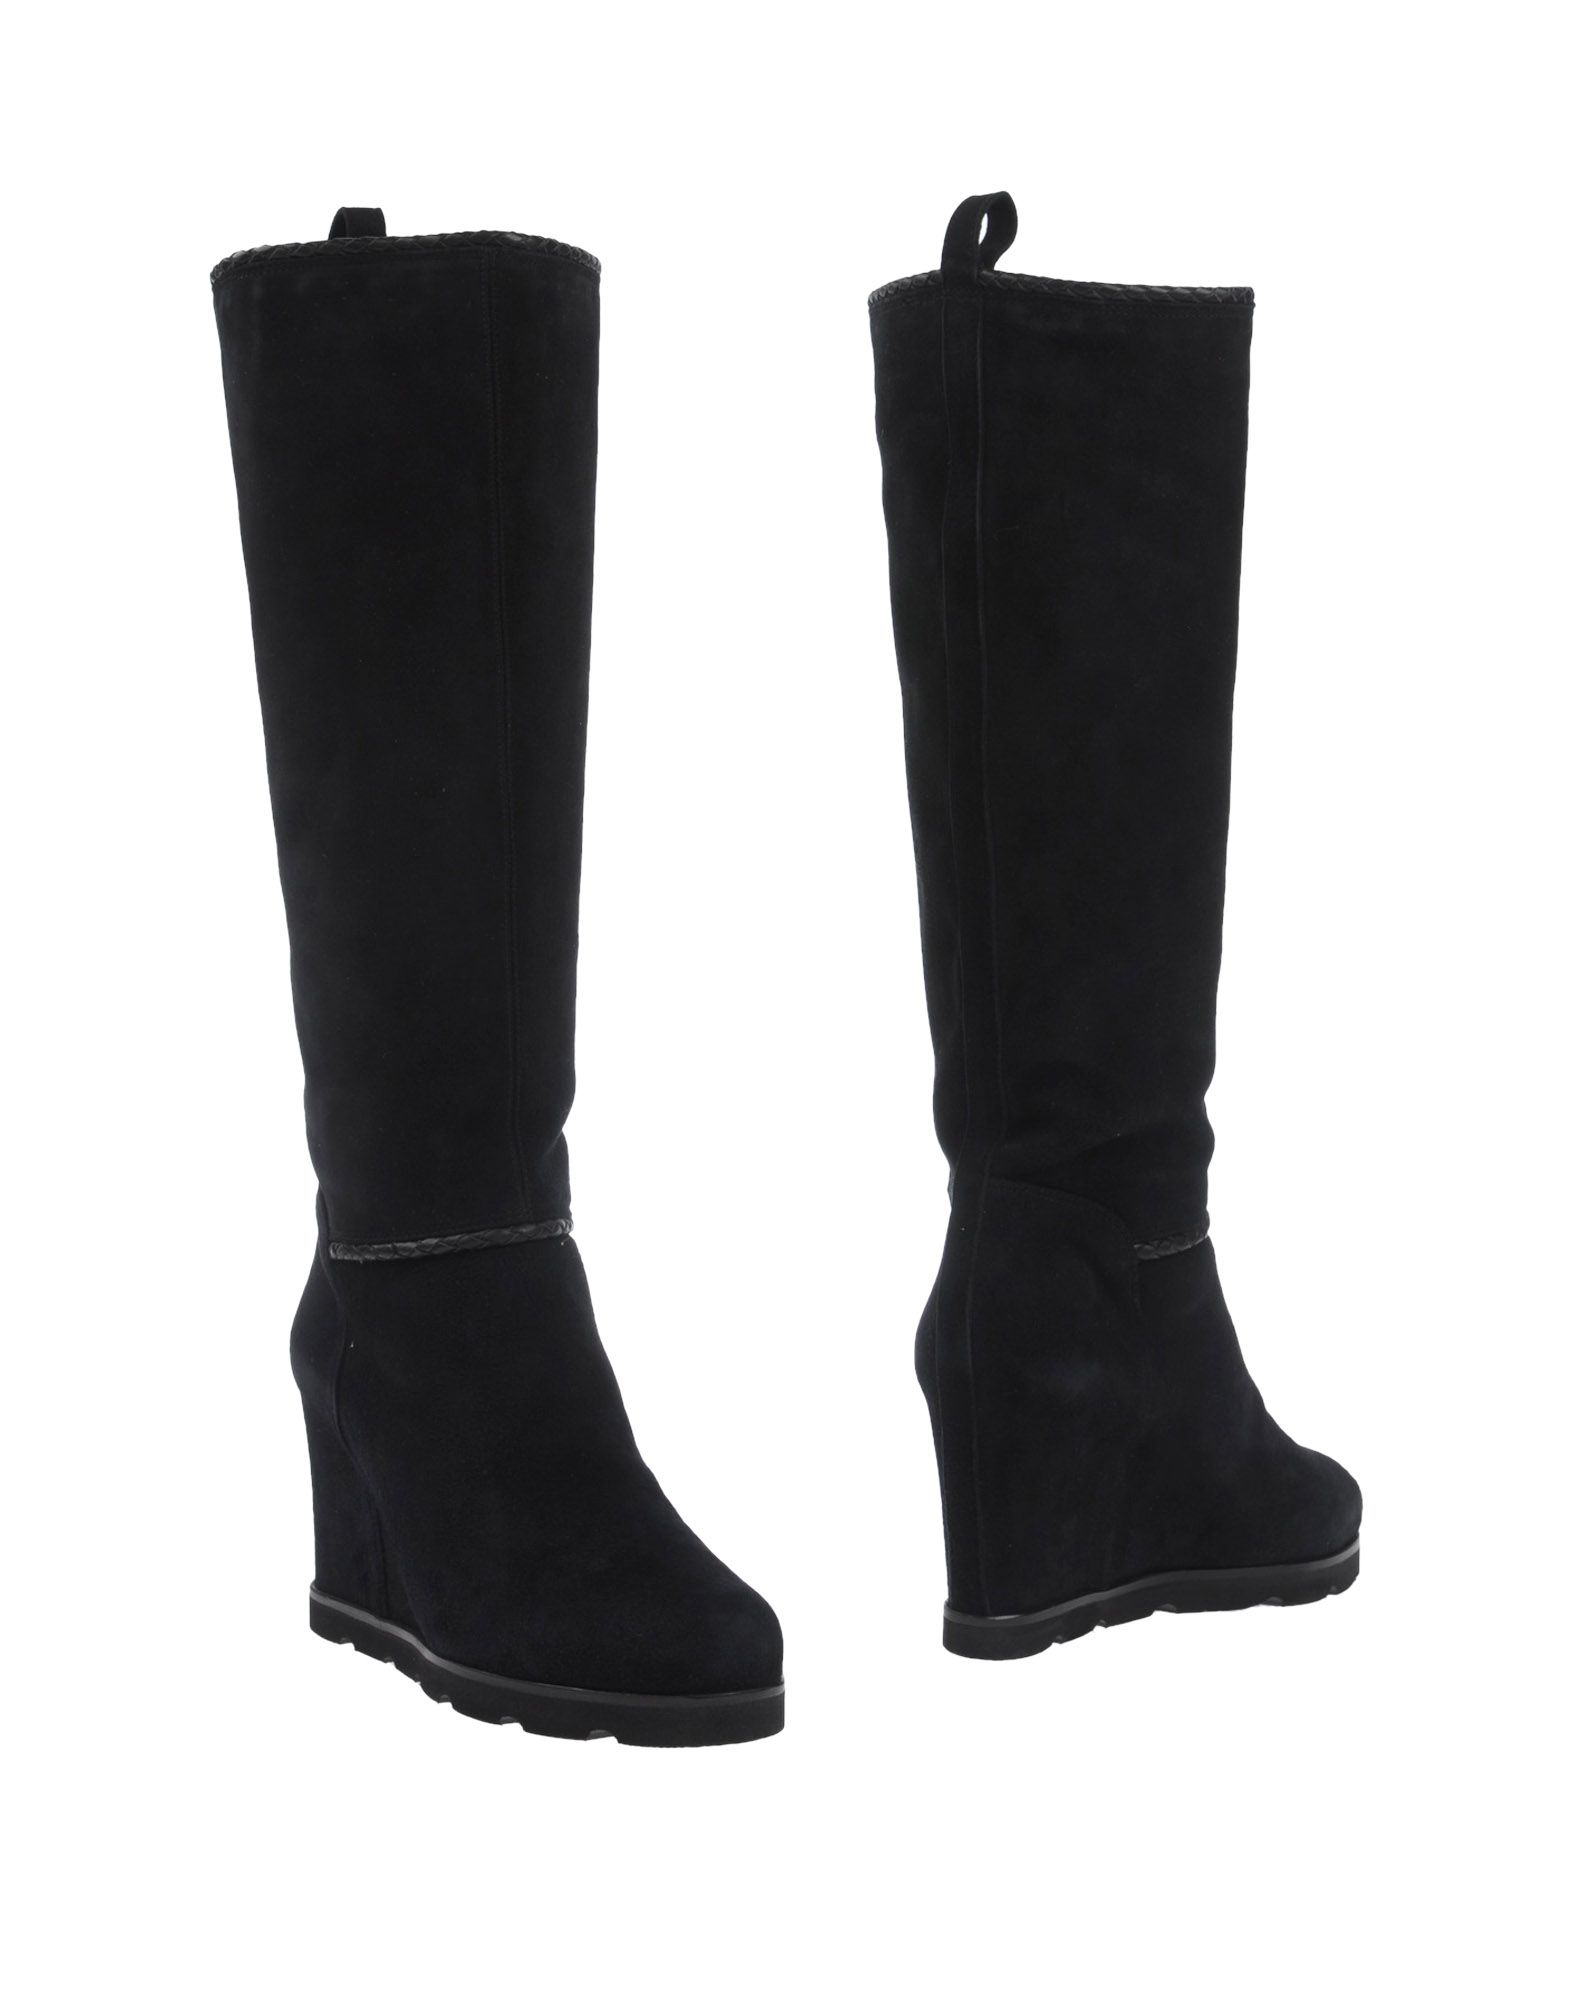 Eva turner Boots in Black | Lyst